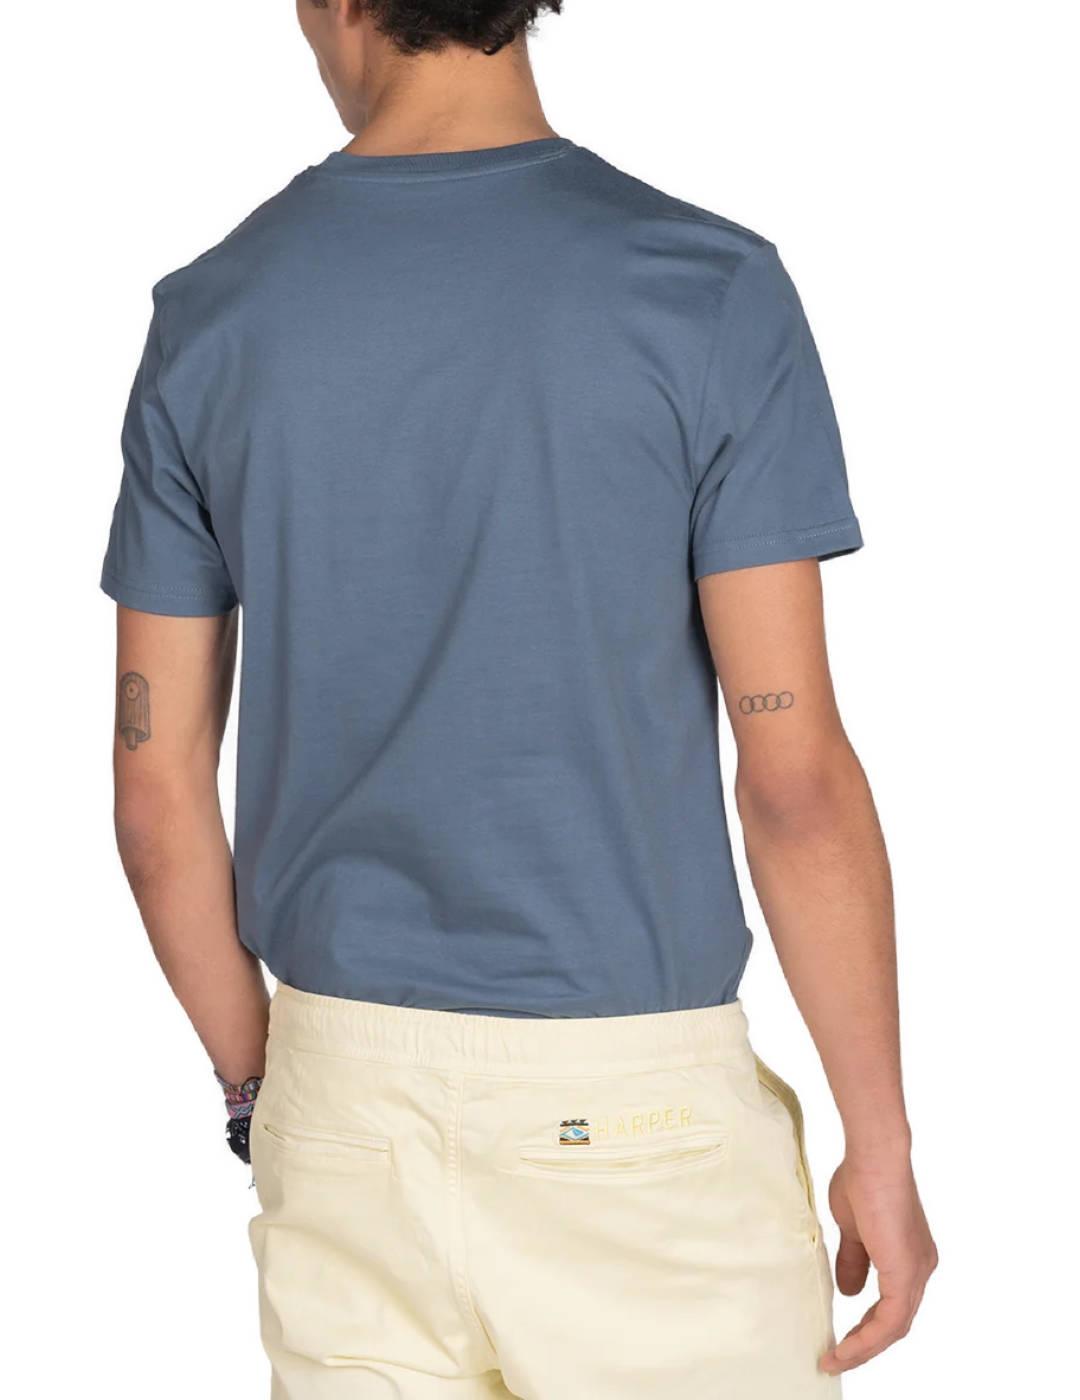 Camiseta Harper&Neyer Skull azul manga corta para hombre